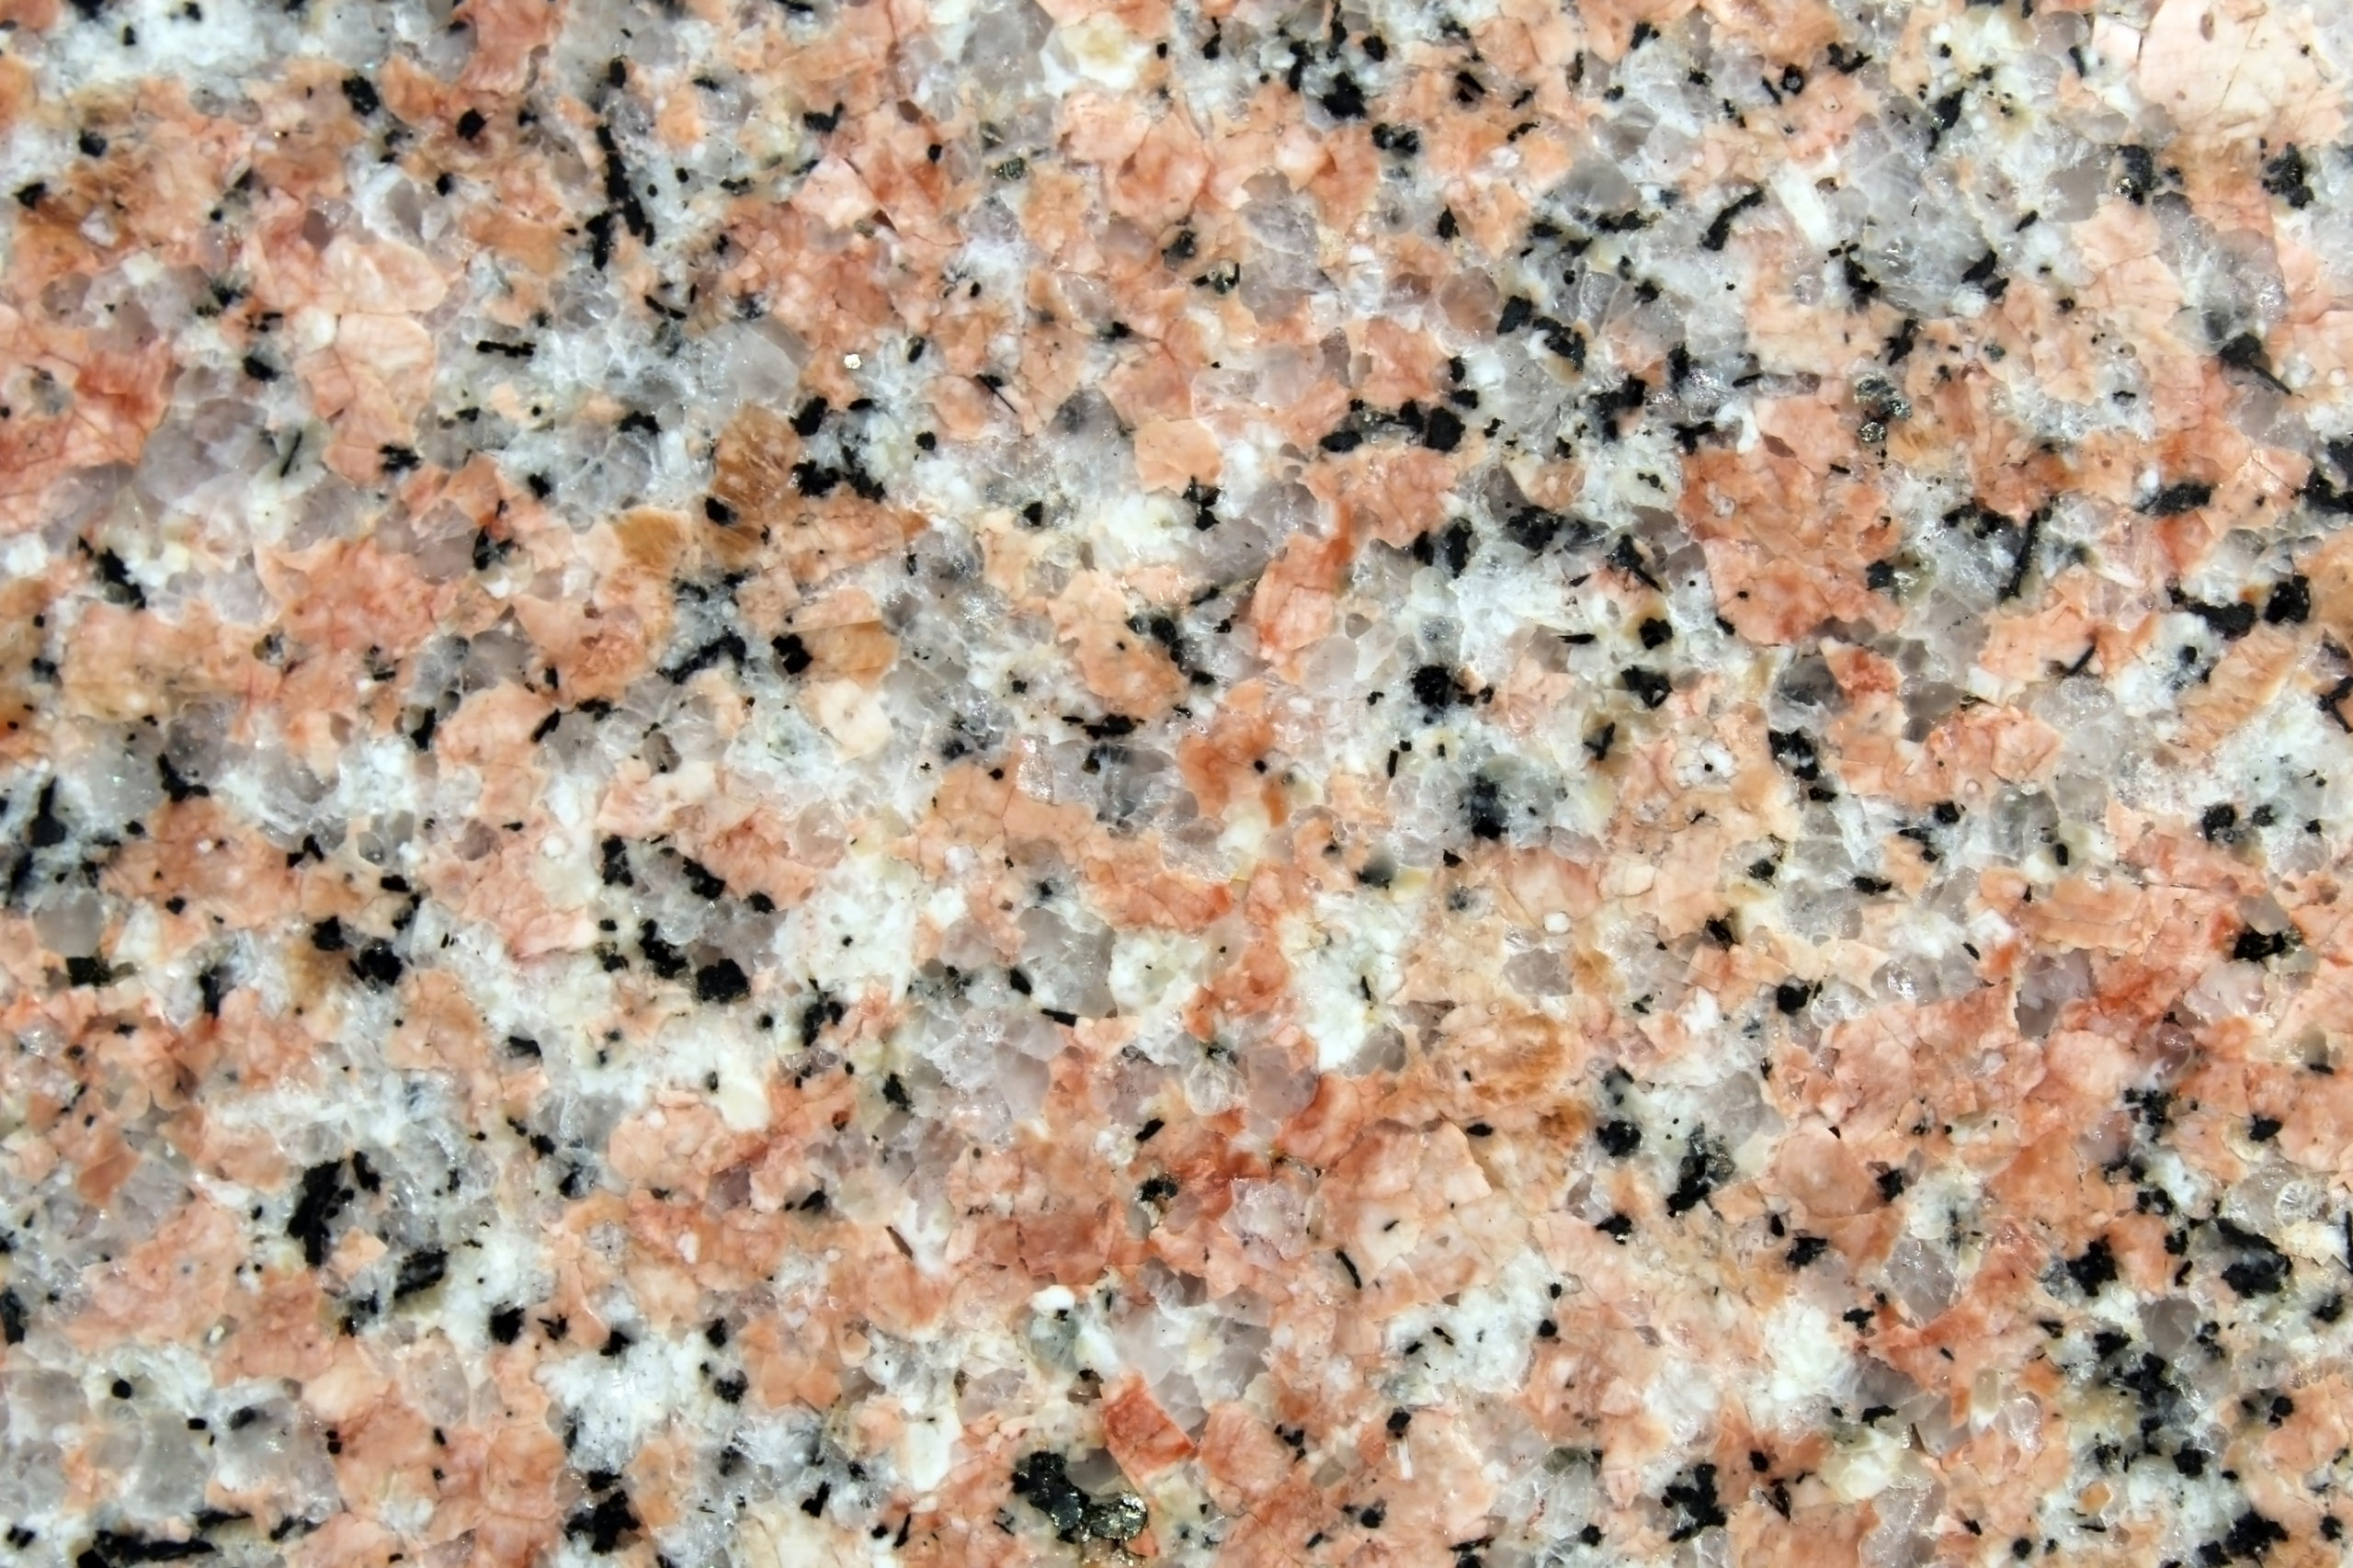 Granite Countertop with visible quartz, feldspar, and accessory minerals.